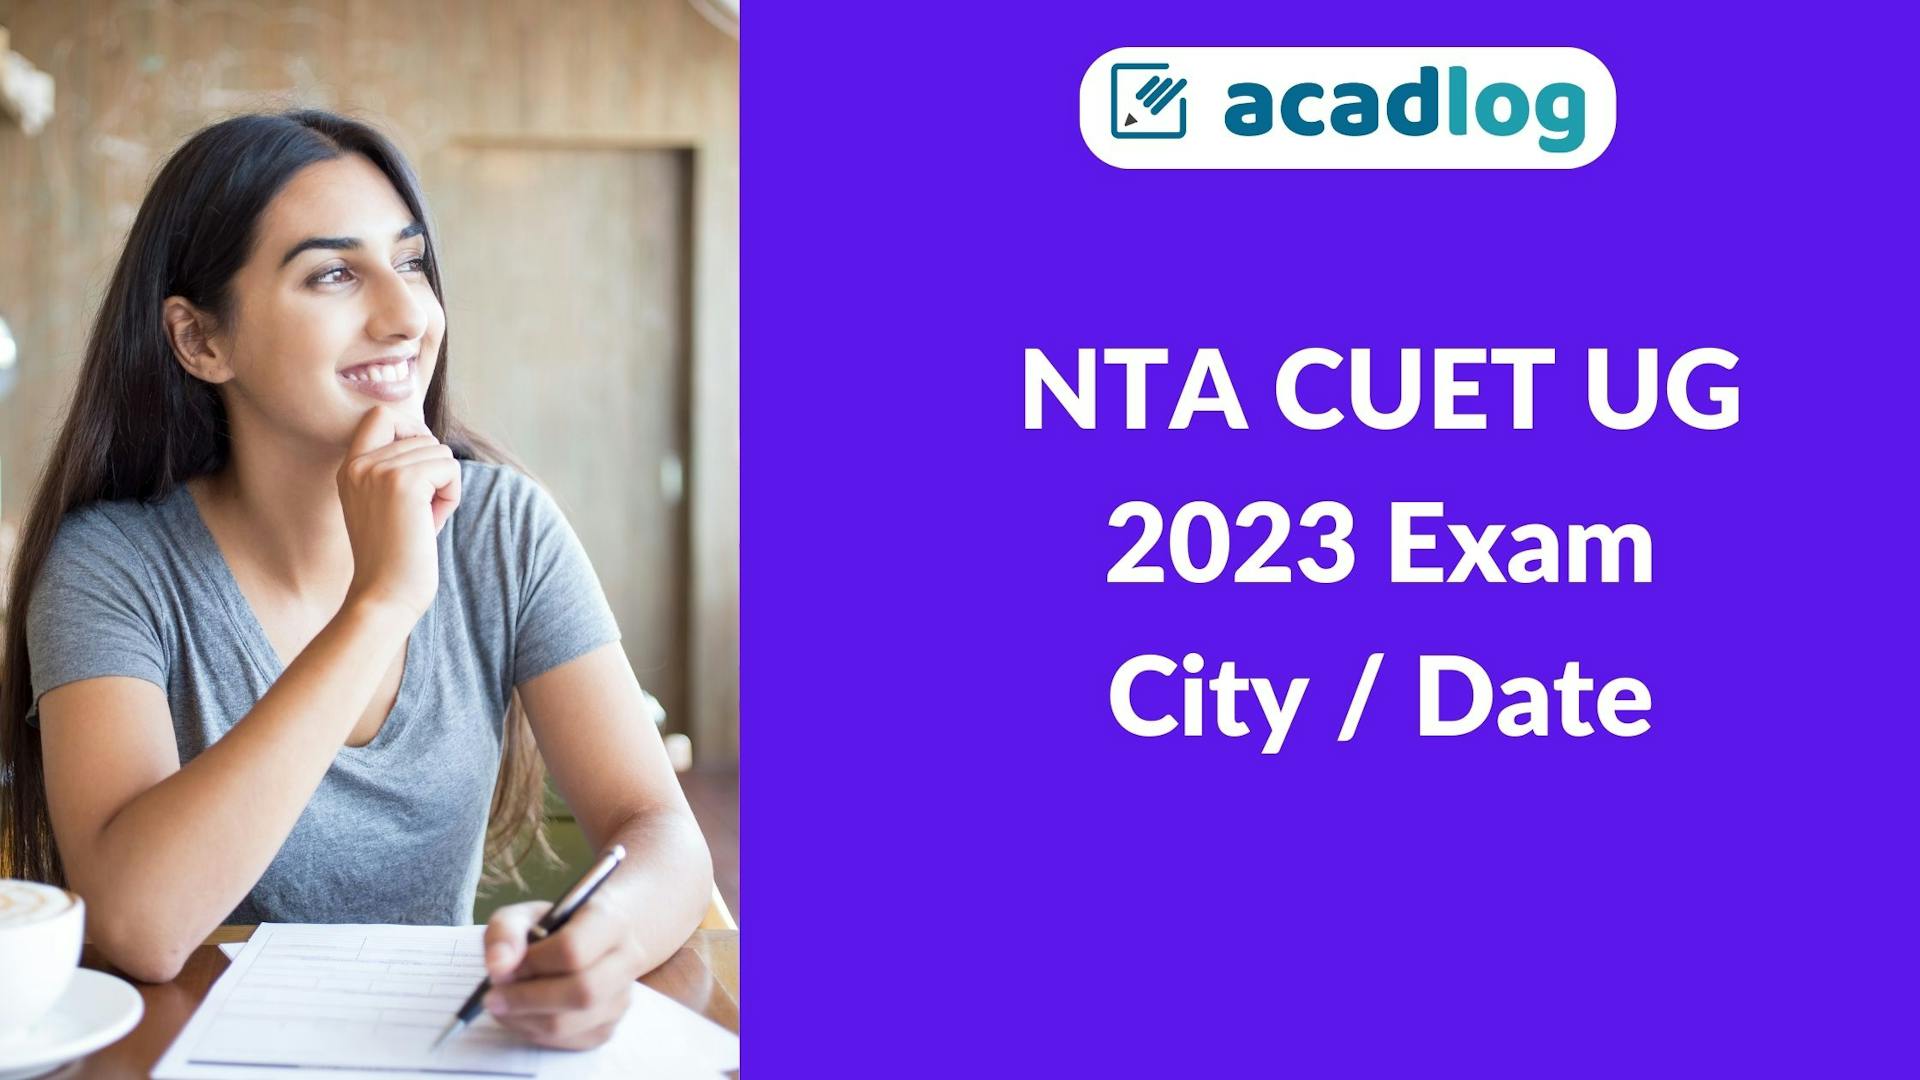 NTA CUET UG 2023 Admission Test Exam City Details